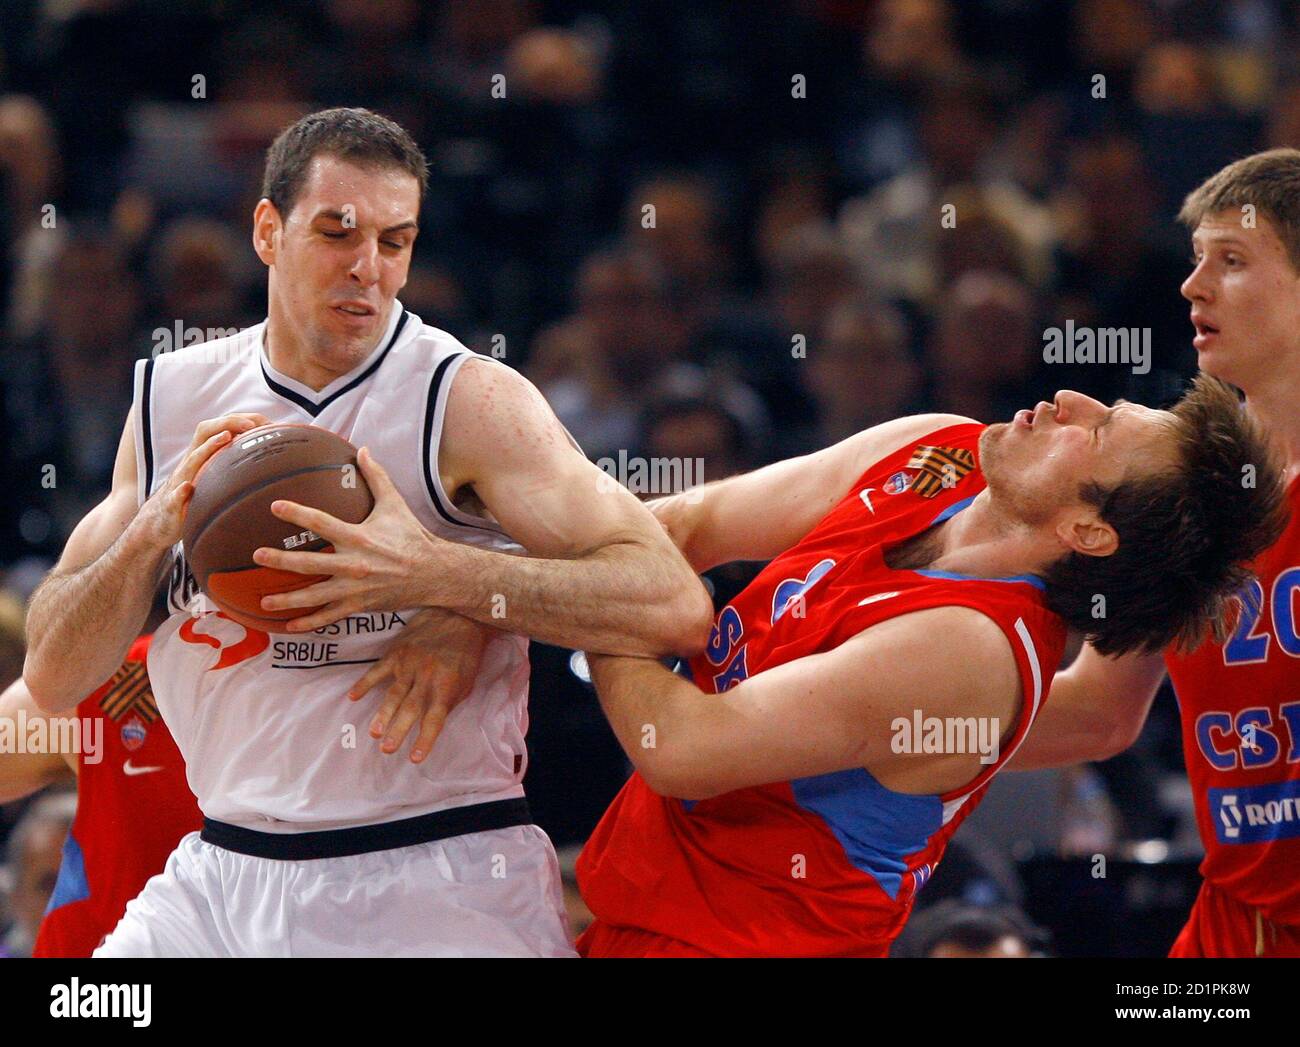 Partizan Belgrade's Aleks Maric (L) is guarded by CSKA Moscow's Matjaz  Smodis during their Euroleague Basketball